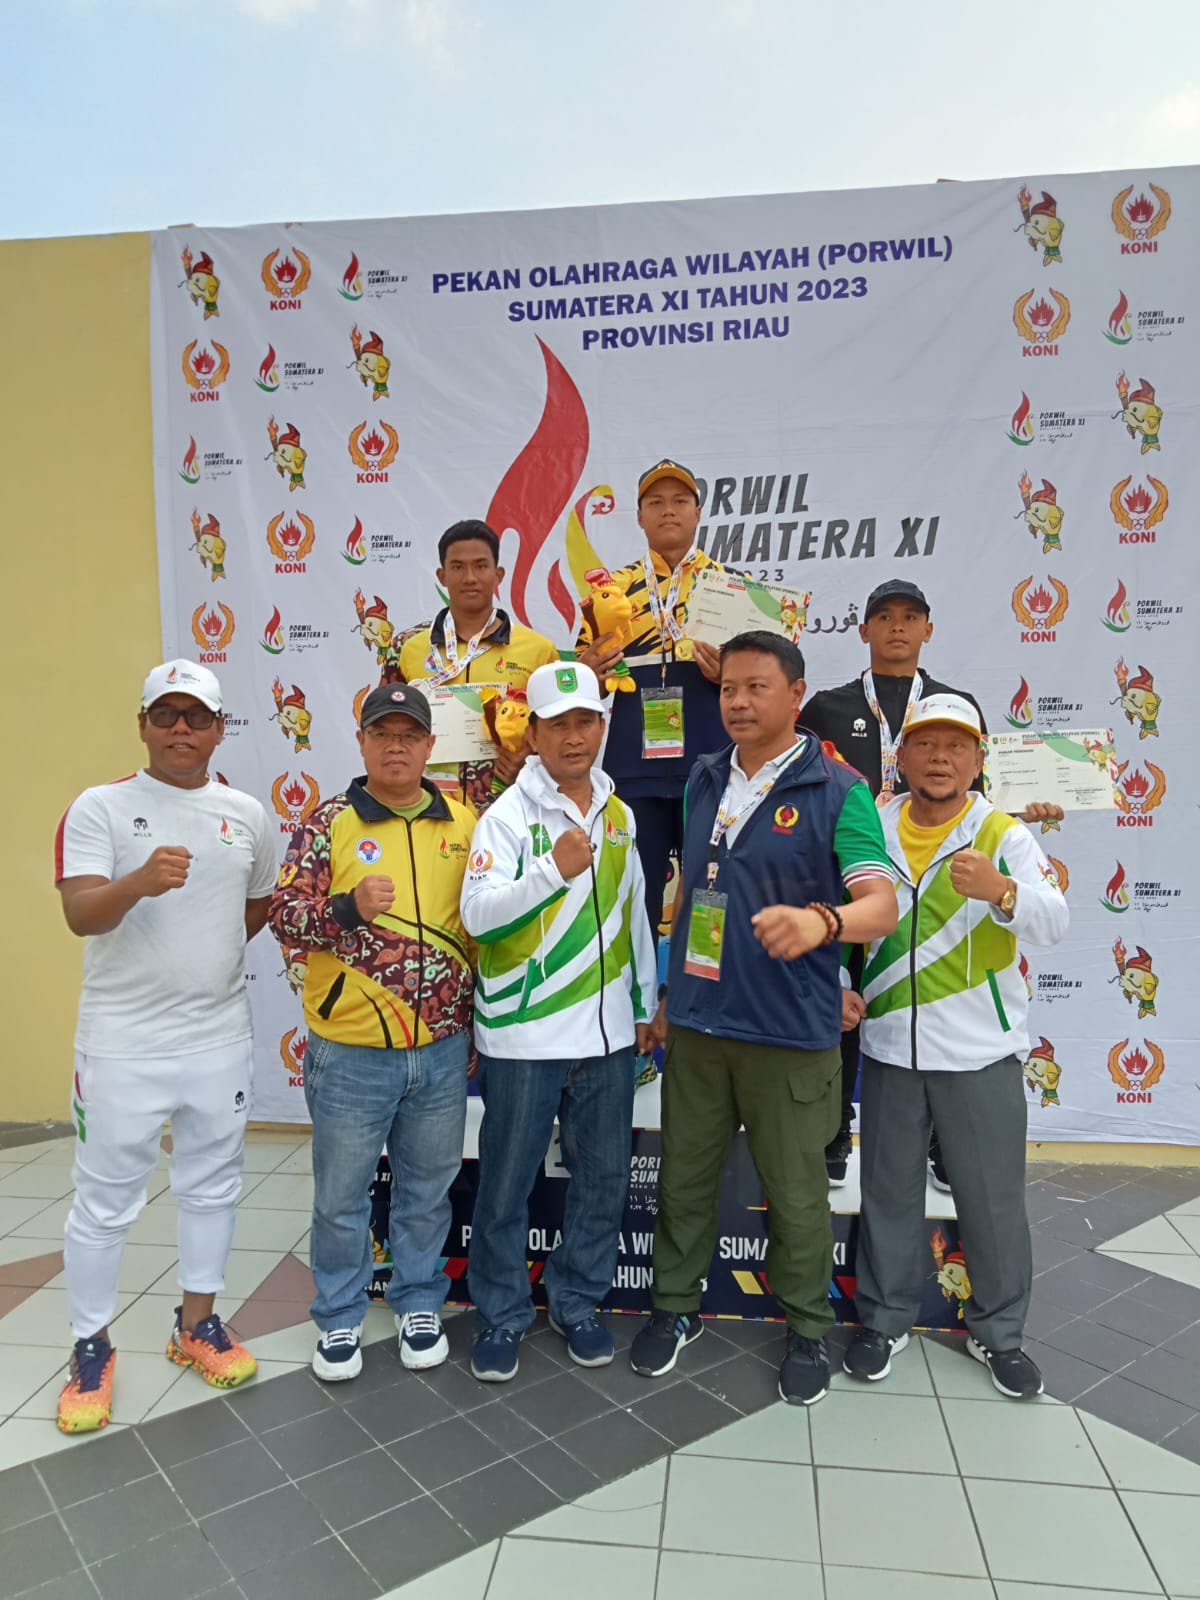 Porwil Sumatera XI Riau, Provinsi Bengkulu Berhasil Sabet Medali Emas Perdana 